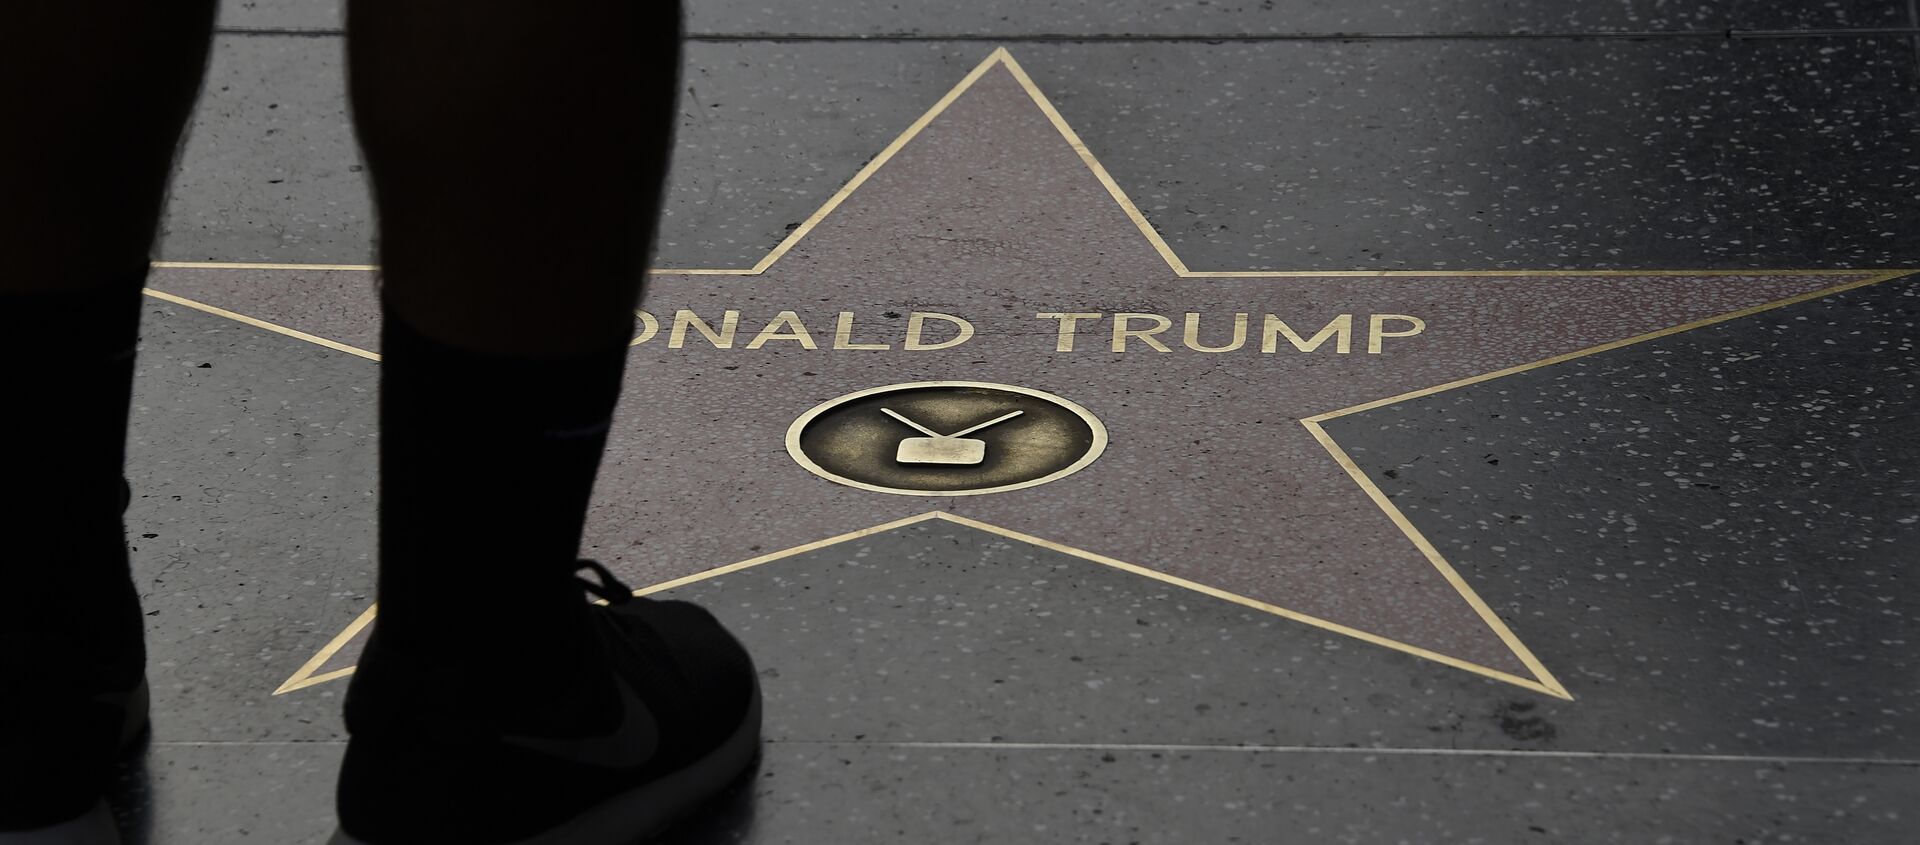 (File) Republican presidential candidate frontrunner Donald Trump's star on the Hollywood Walk of Fame in seen, September 10, 2015 in Hollywood, California - Sputnik Türkiye, 1920, 21.09.2018